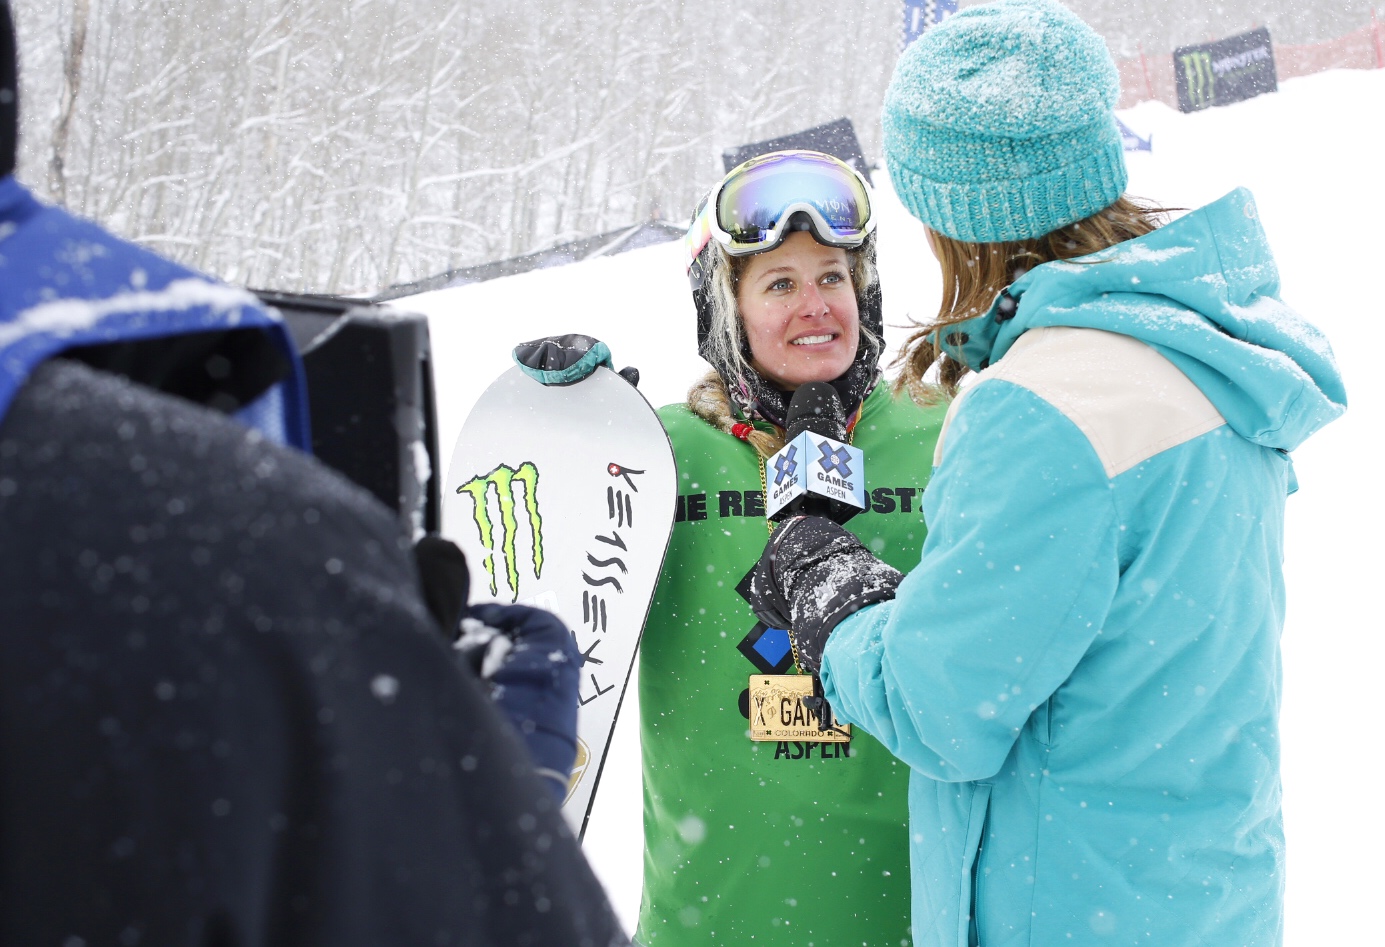 Monster Energy's Lindsey Jacobellis Wins Women's Snowboarder X at X Games Aspen 2016